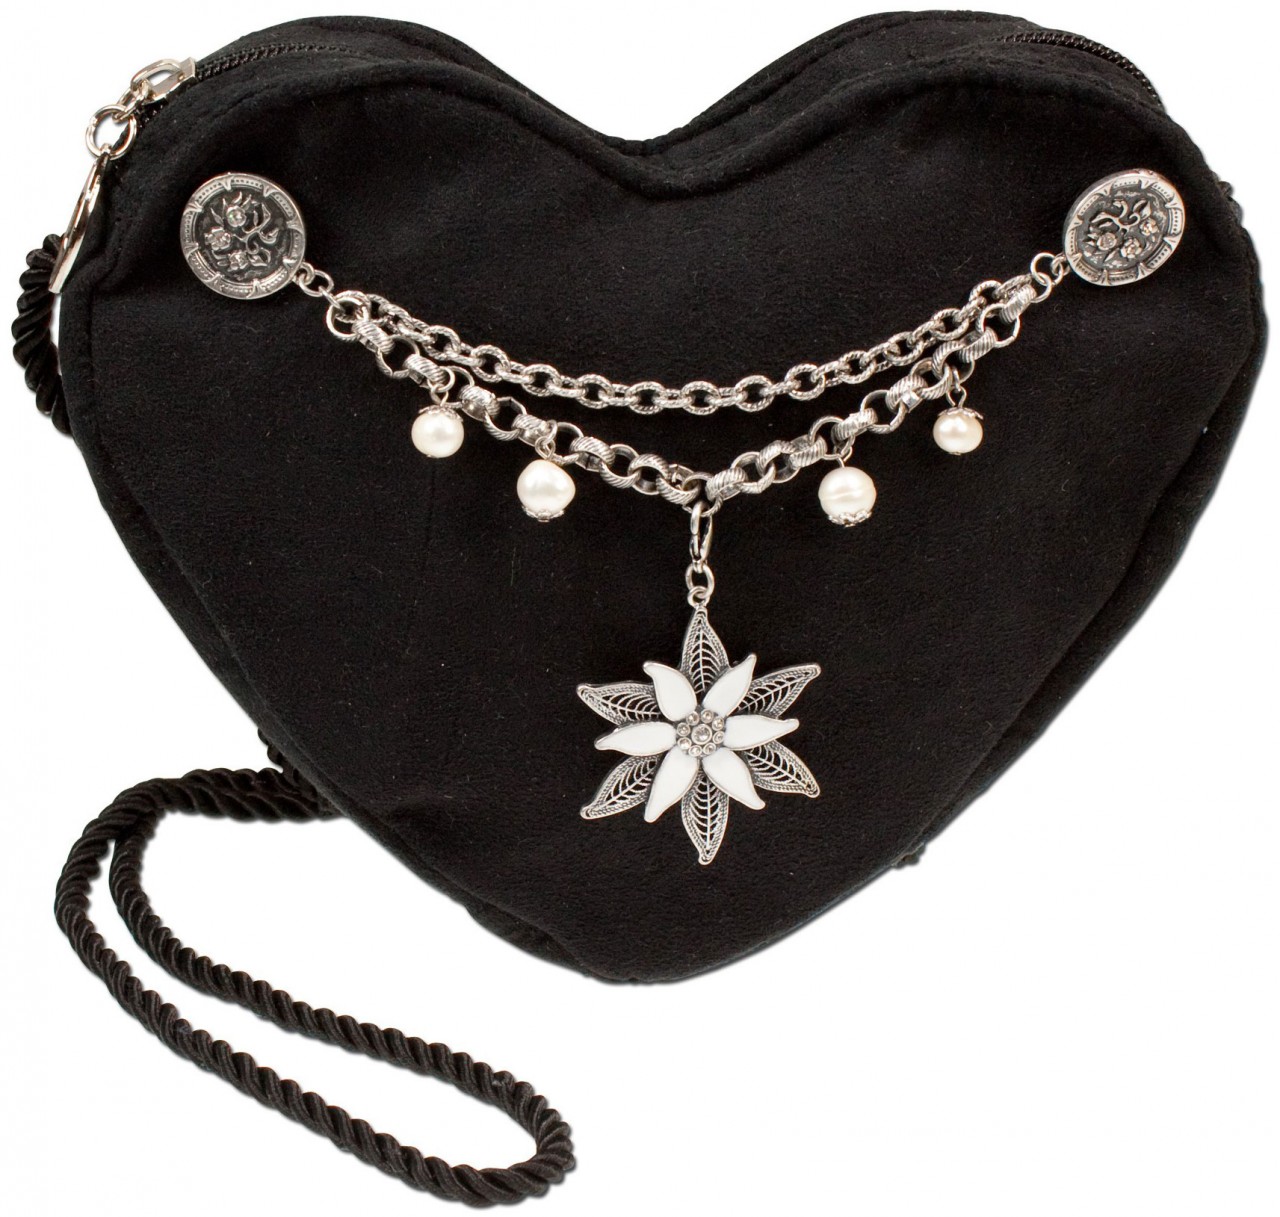 Vorschau: Heart-shaped Handbag with Edelweiß Charivari, Black